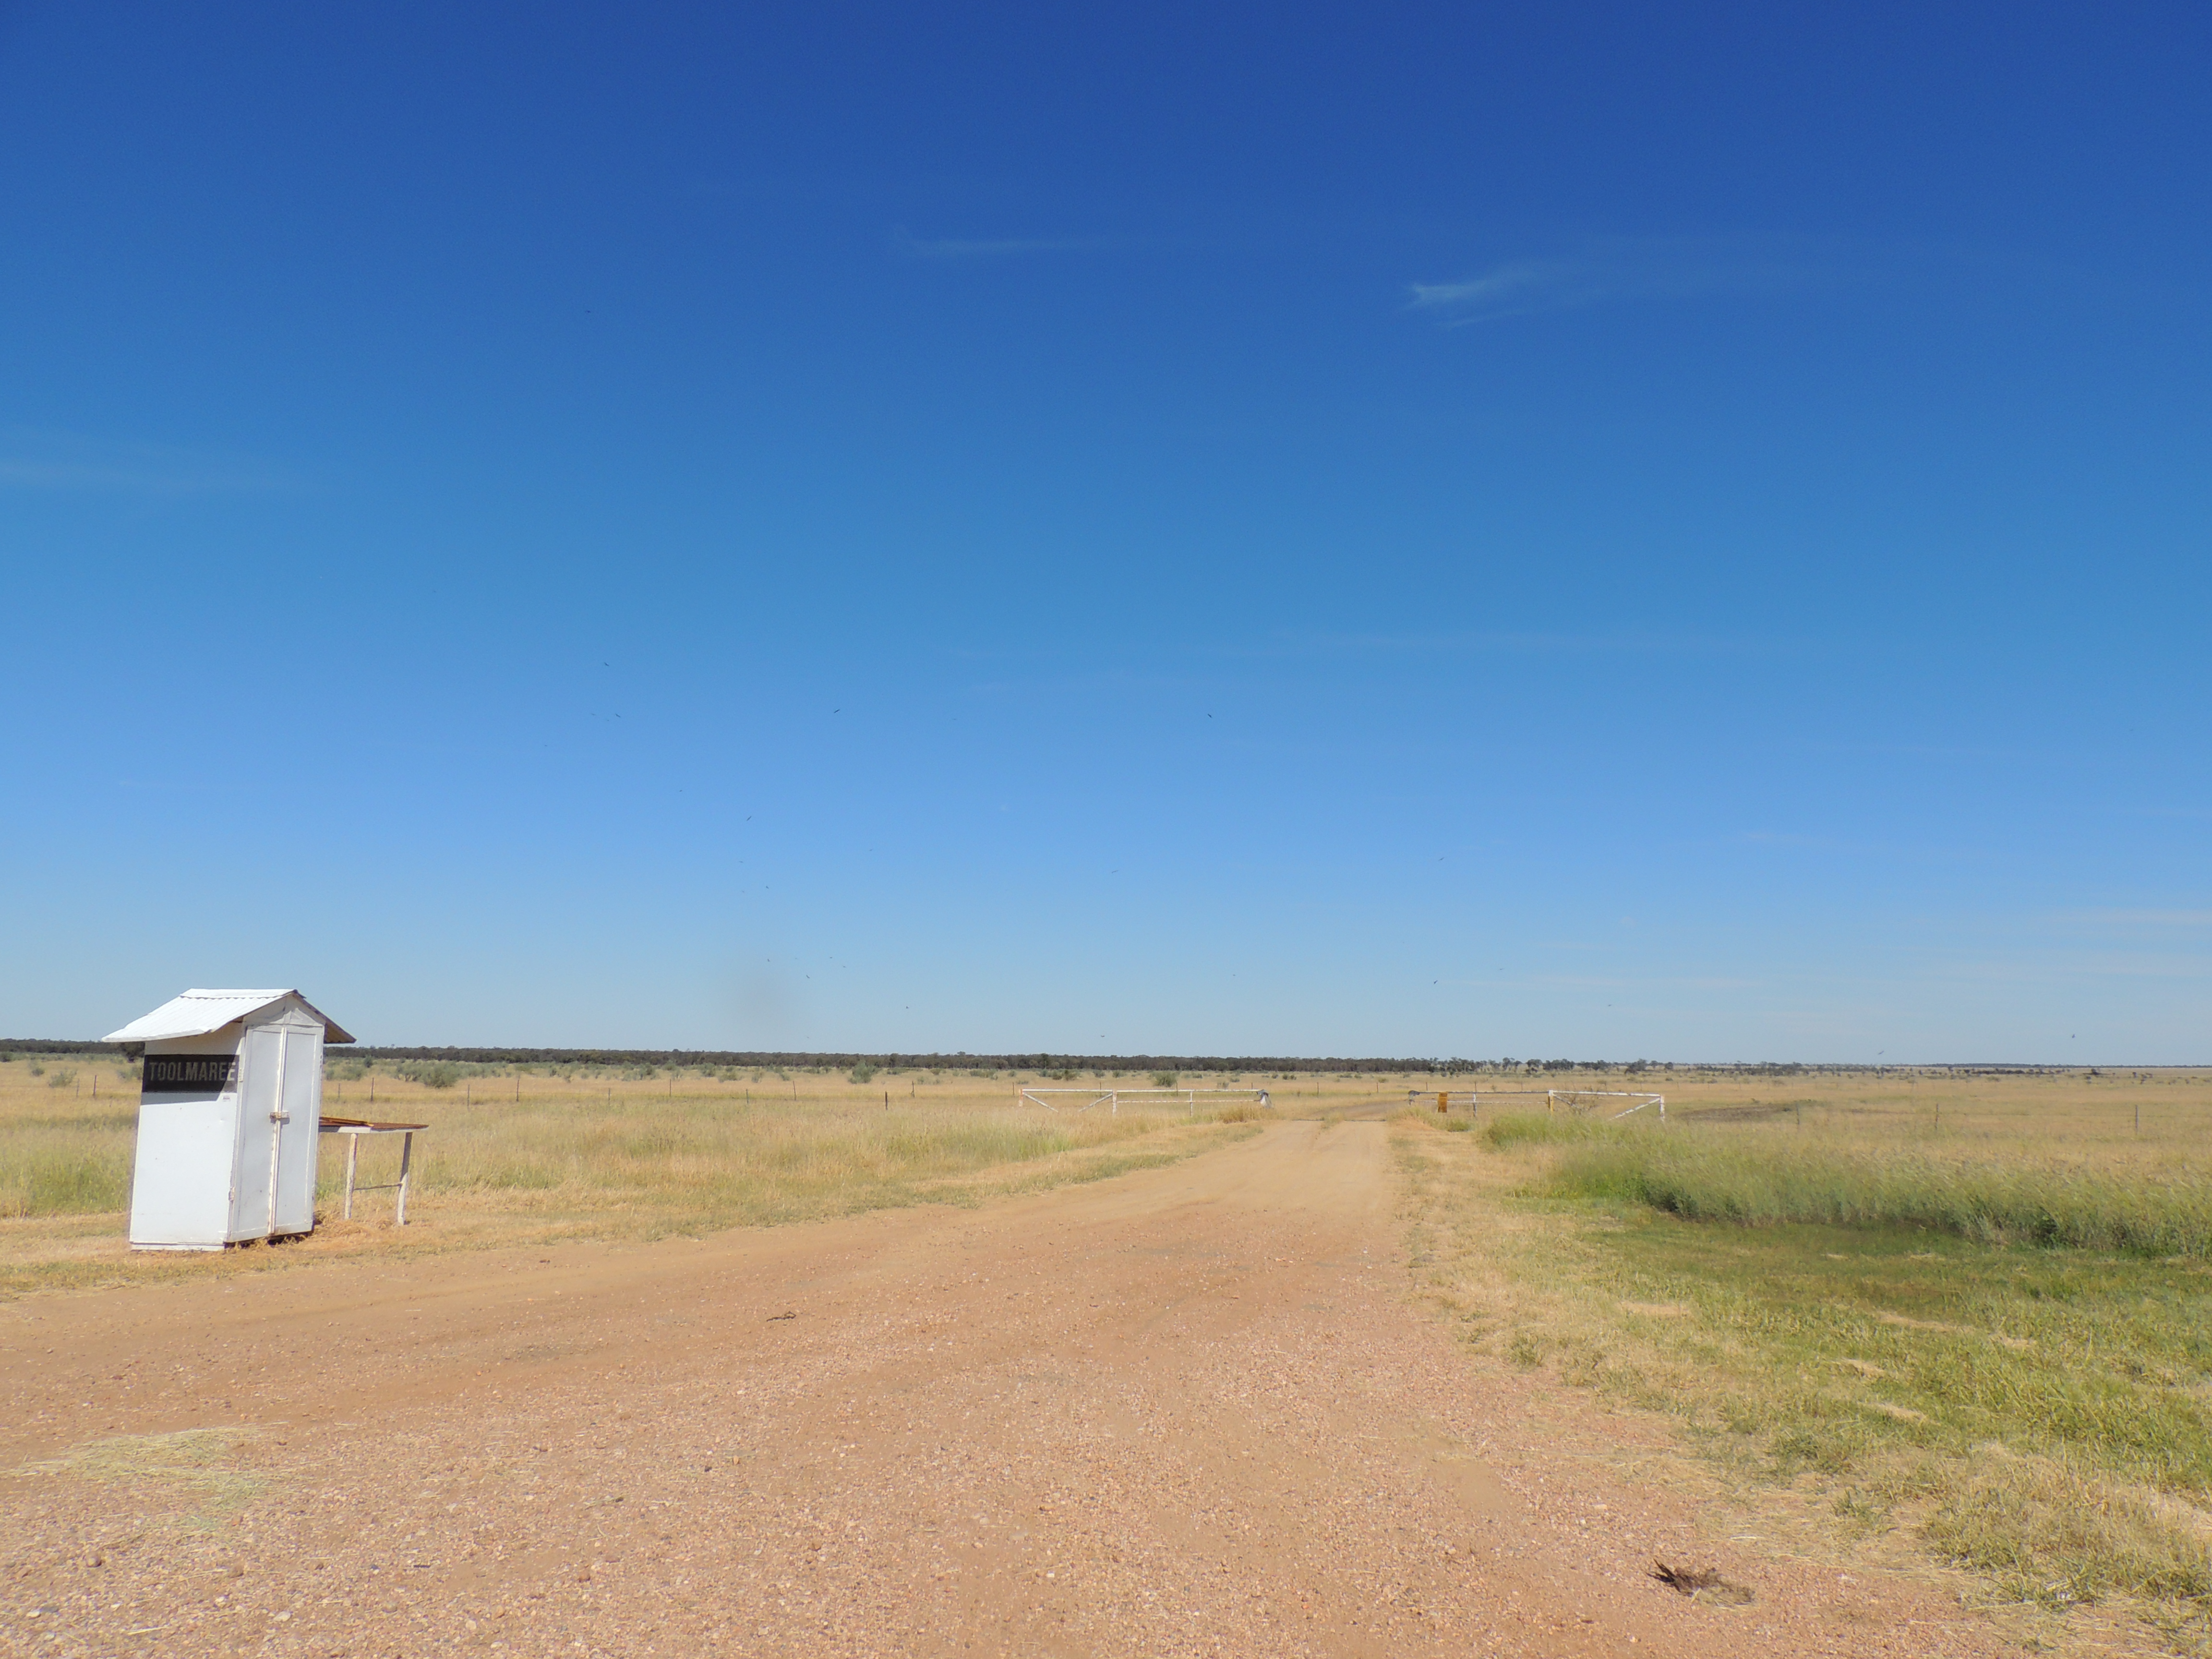 Outback roadtrip